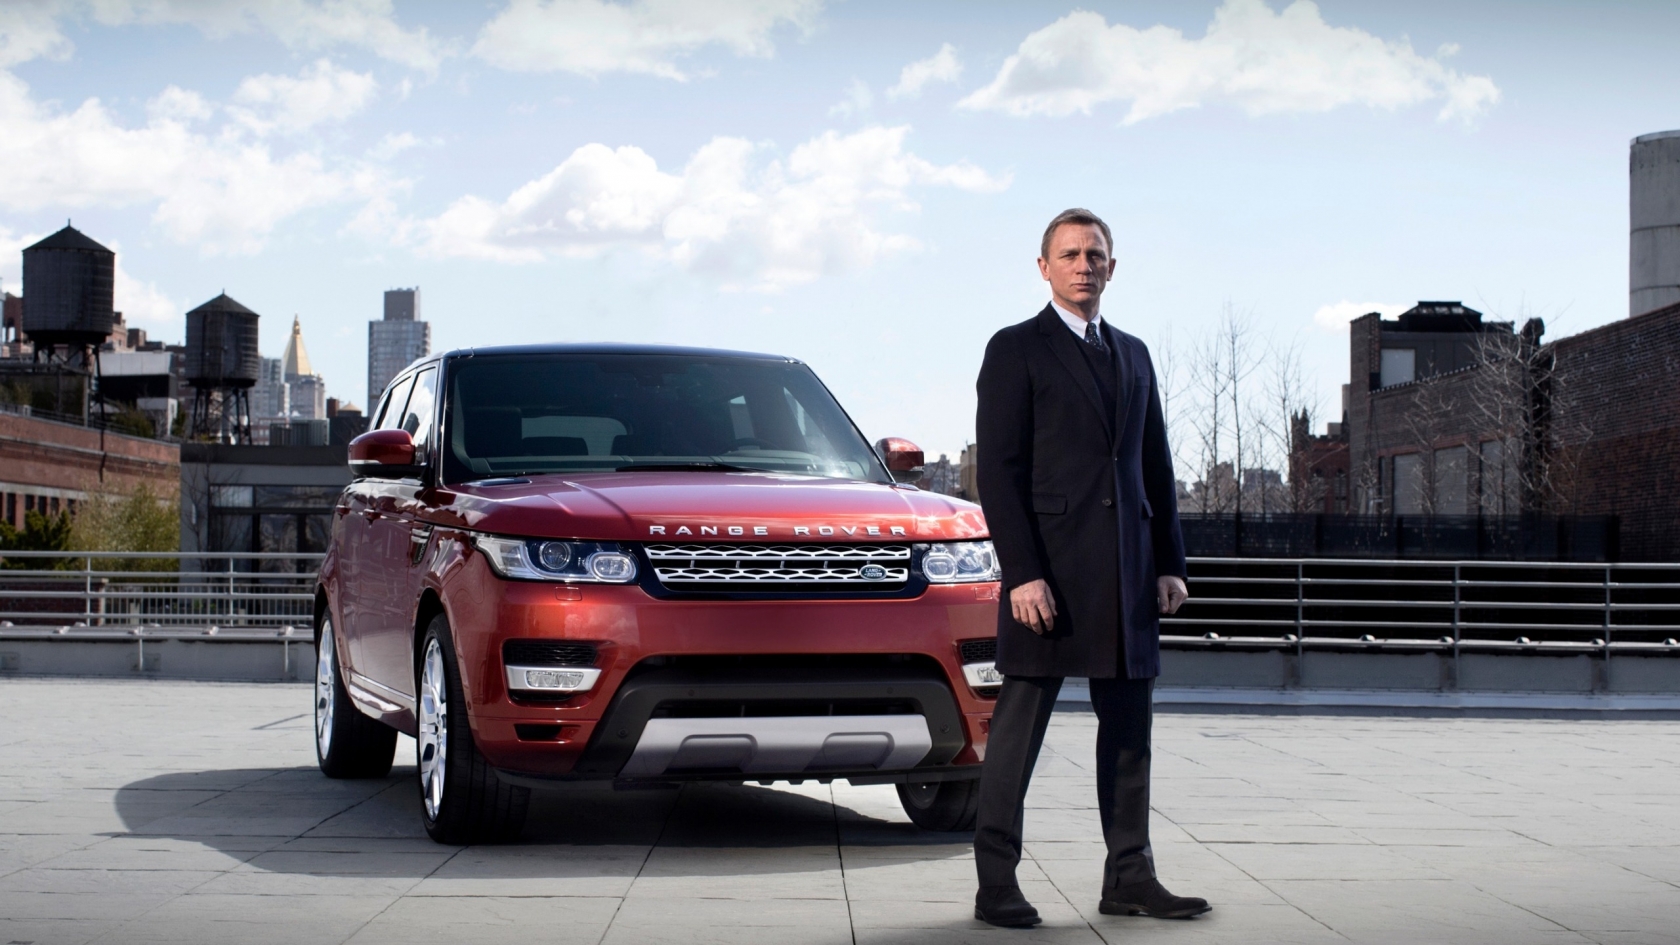 Daniel Craig and Range Rover for 1680 x 945 HDTV resolution